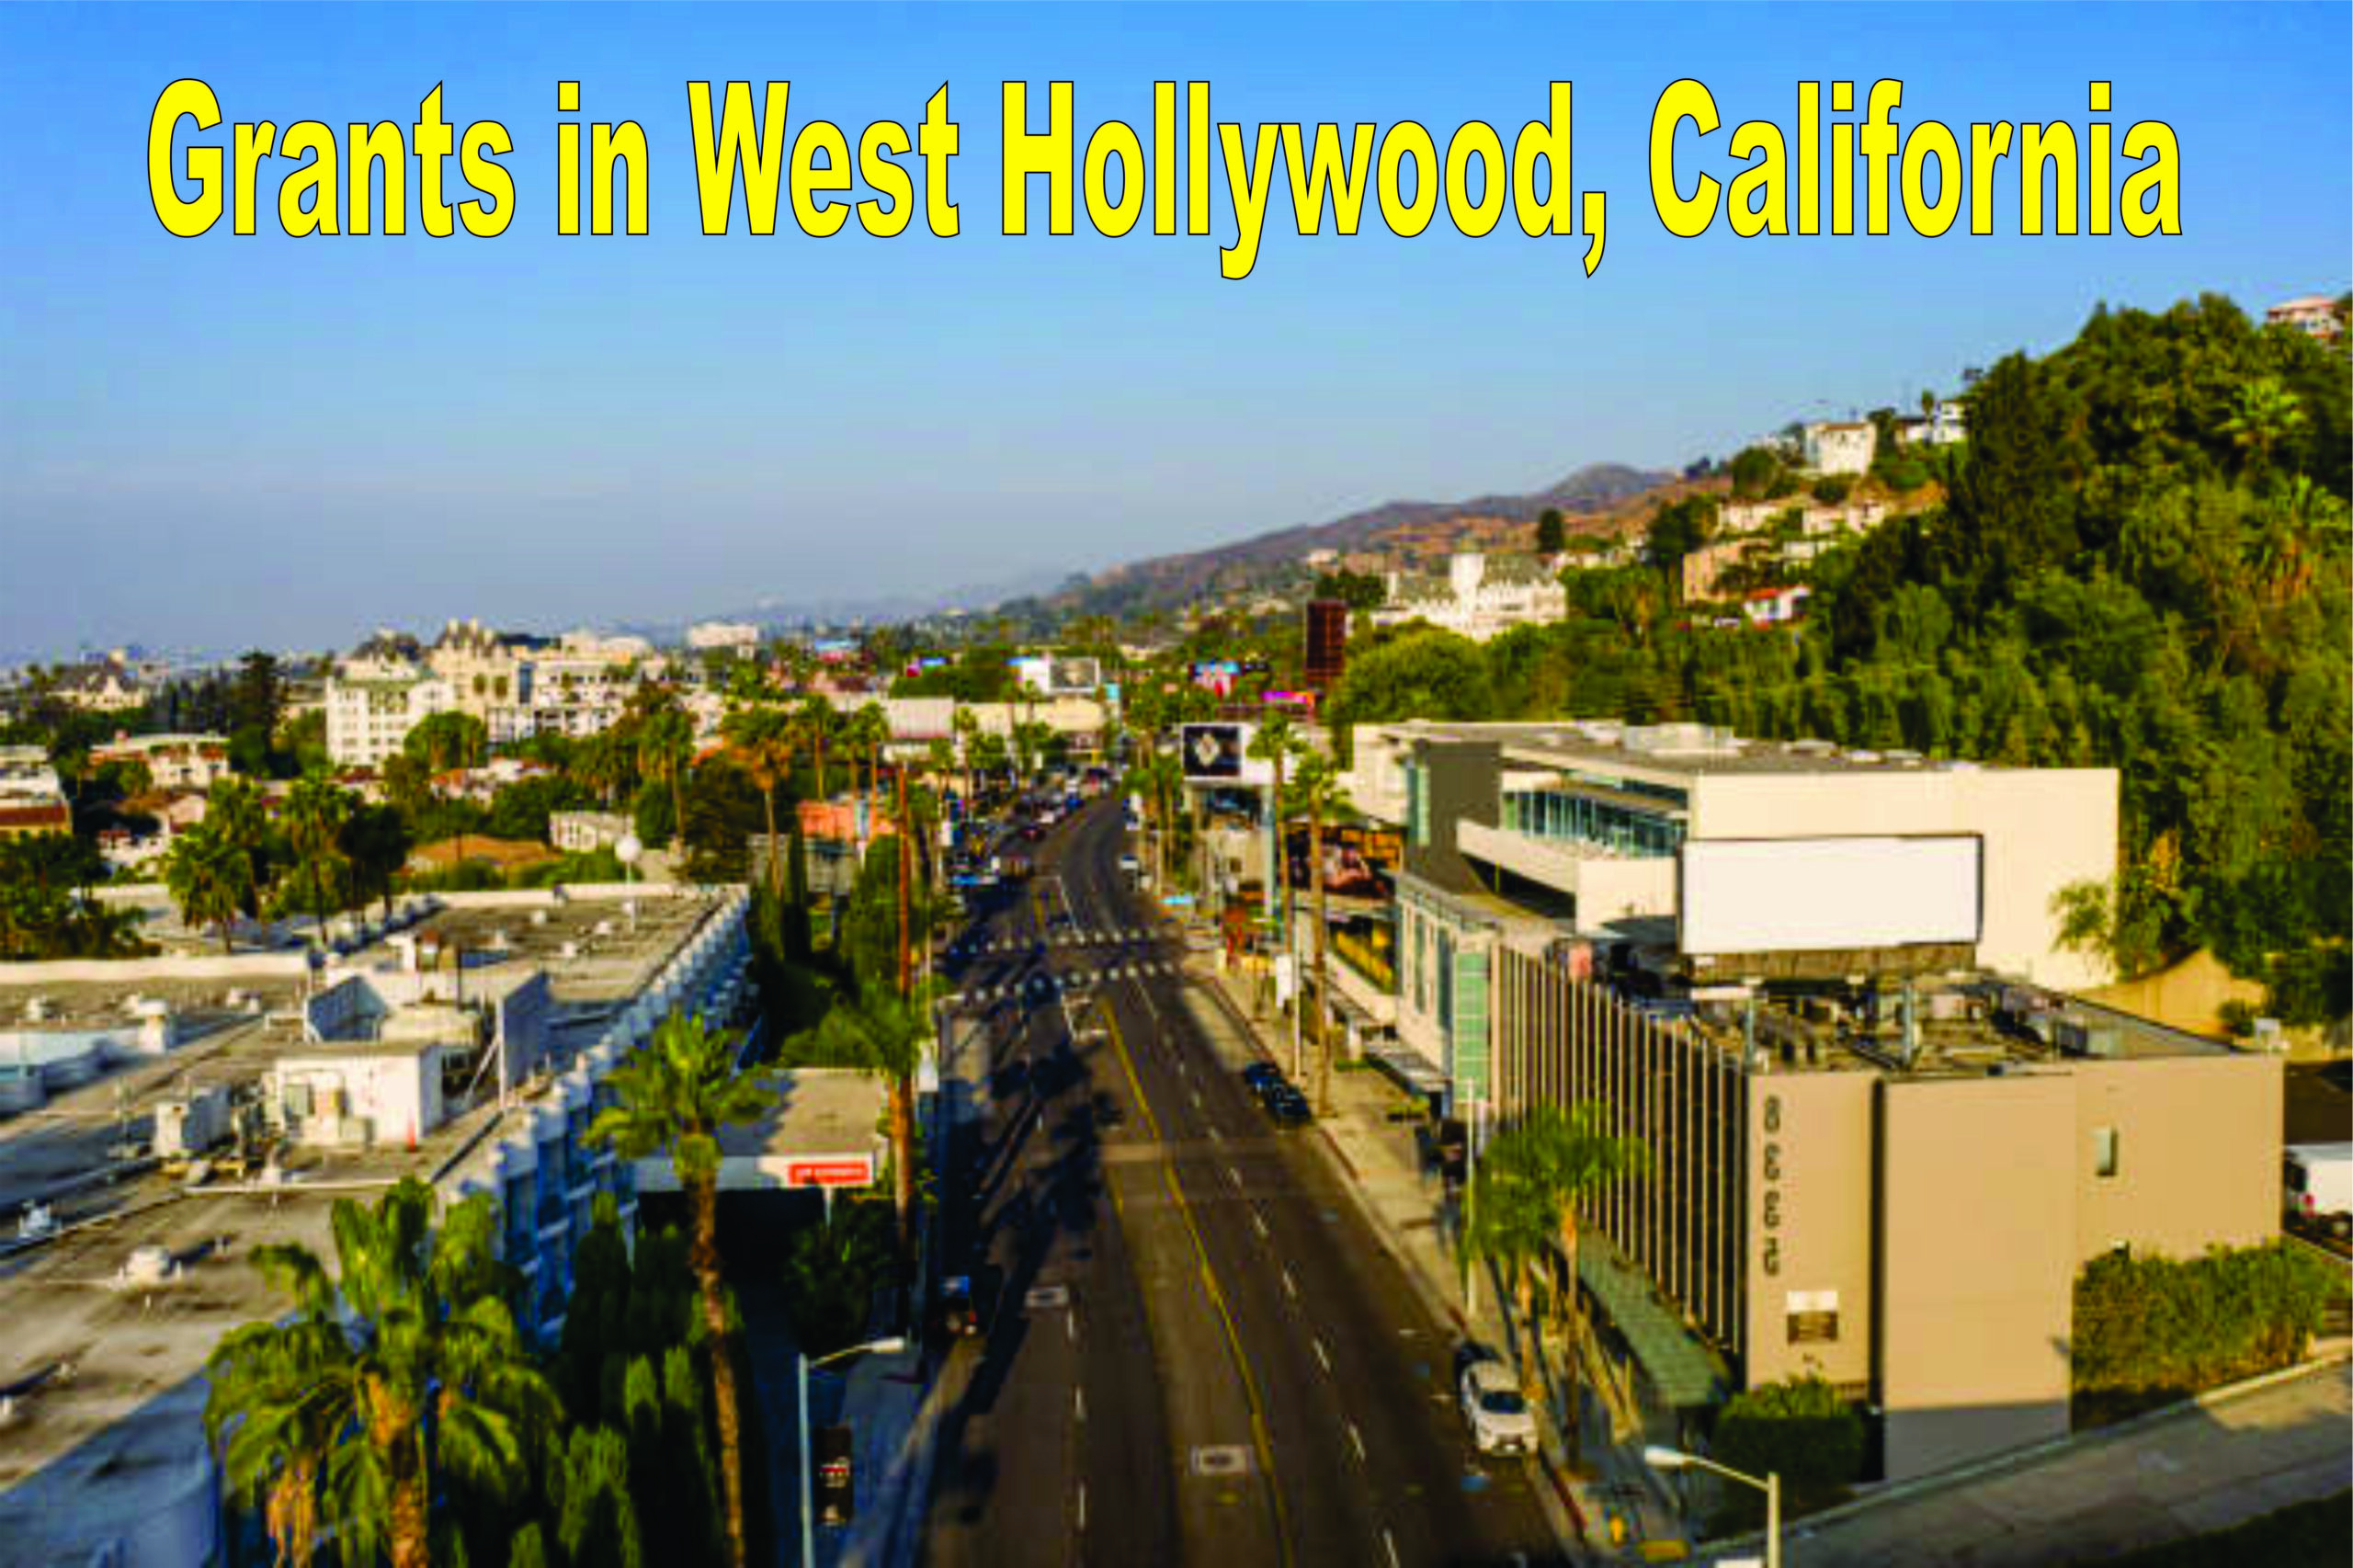 West Hollywood, California